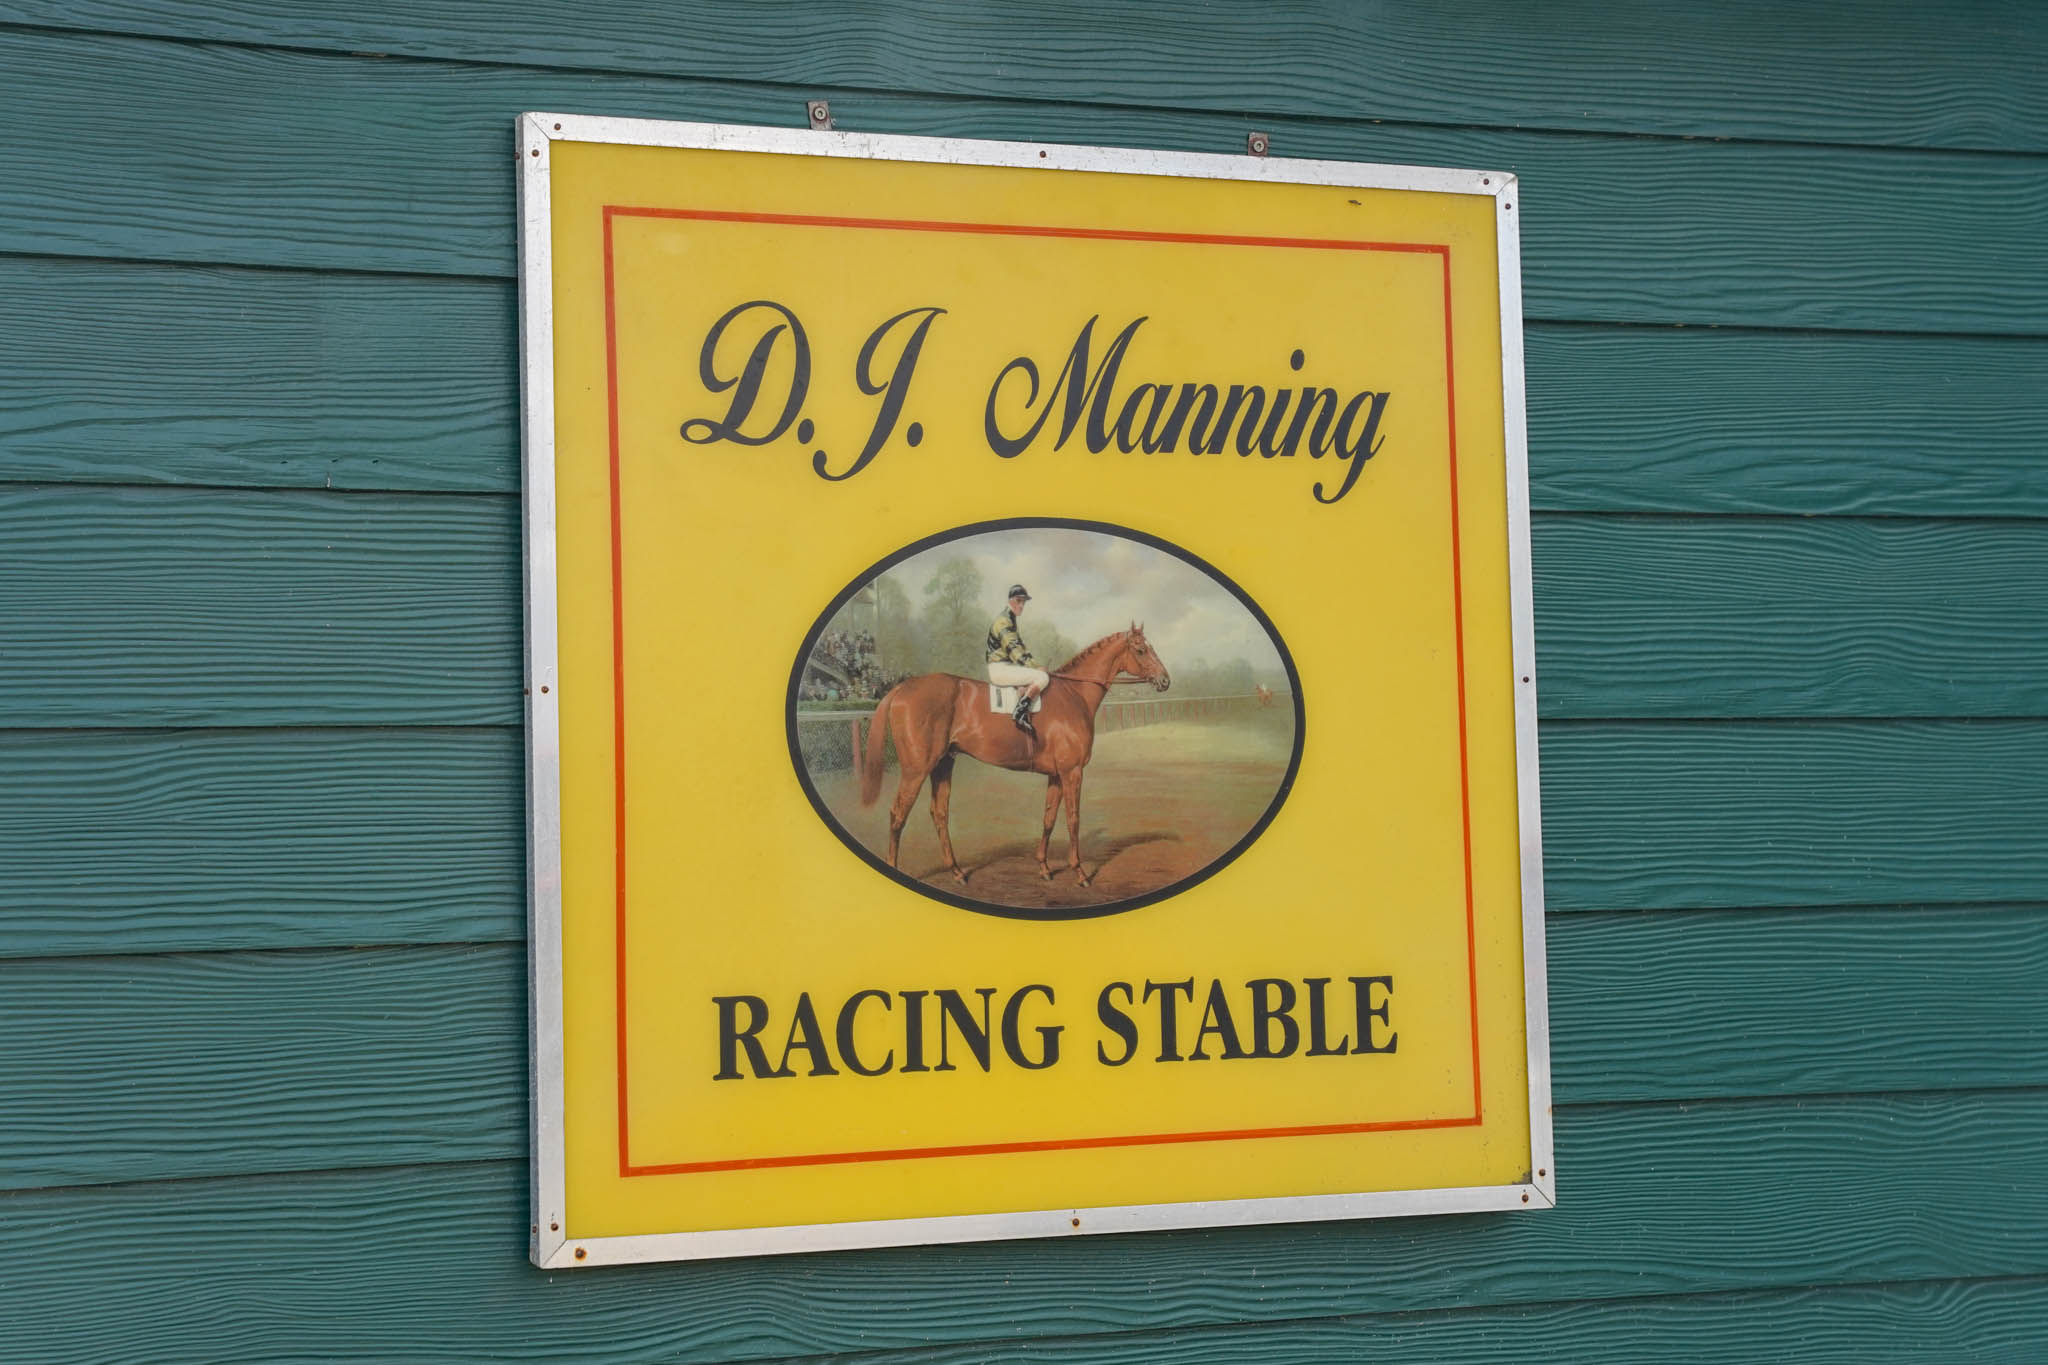 D.J. Manning Racing at Oak Ridge Training Center